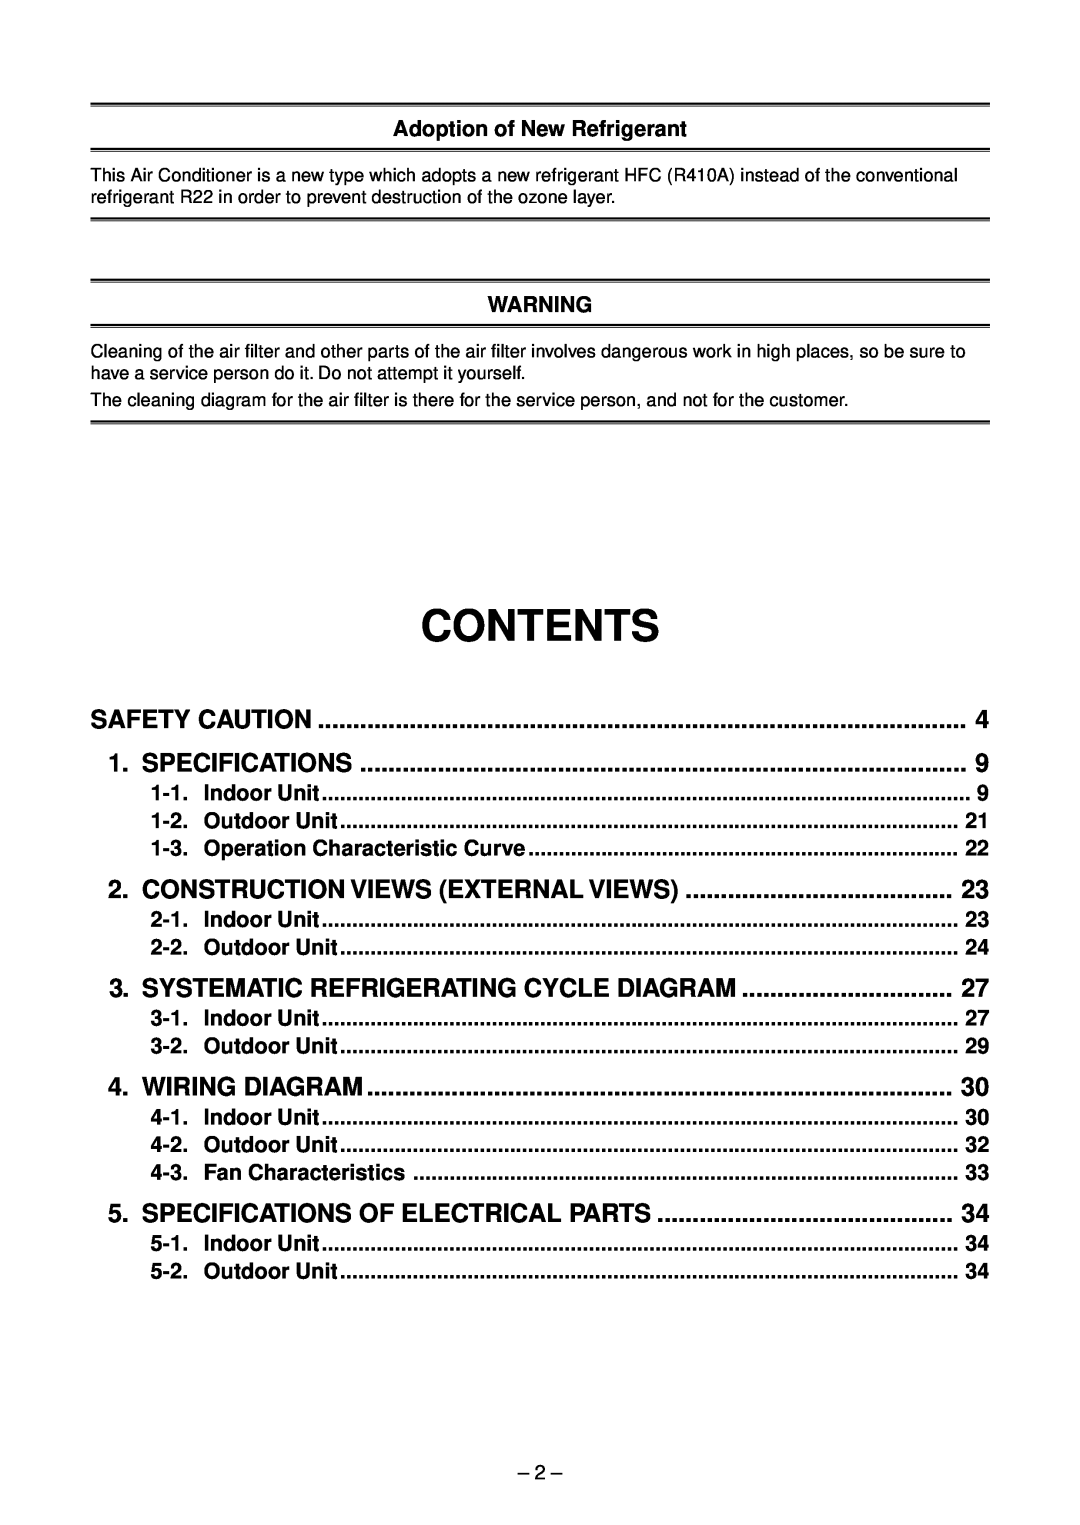 Toshiba RAV-SM1603ATZ-E Contents, Safety Caution, Specifications, Construction Views External Views, Wiring Diagram 